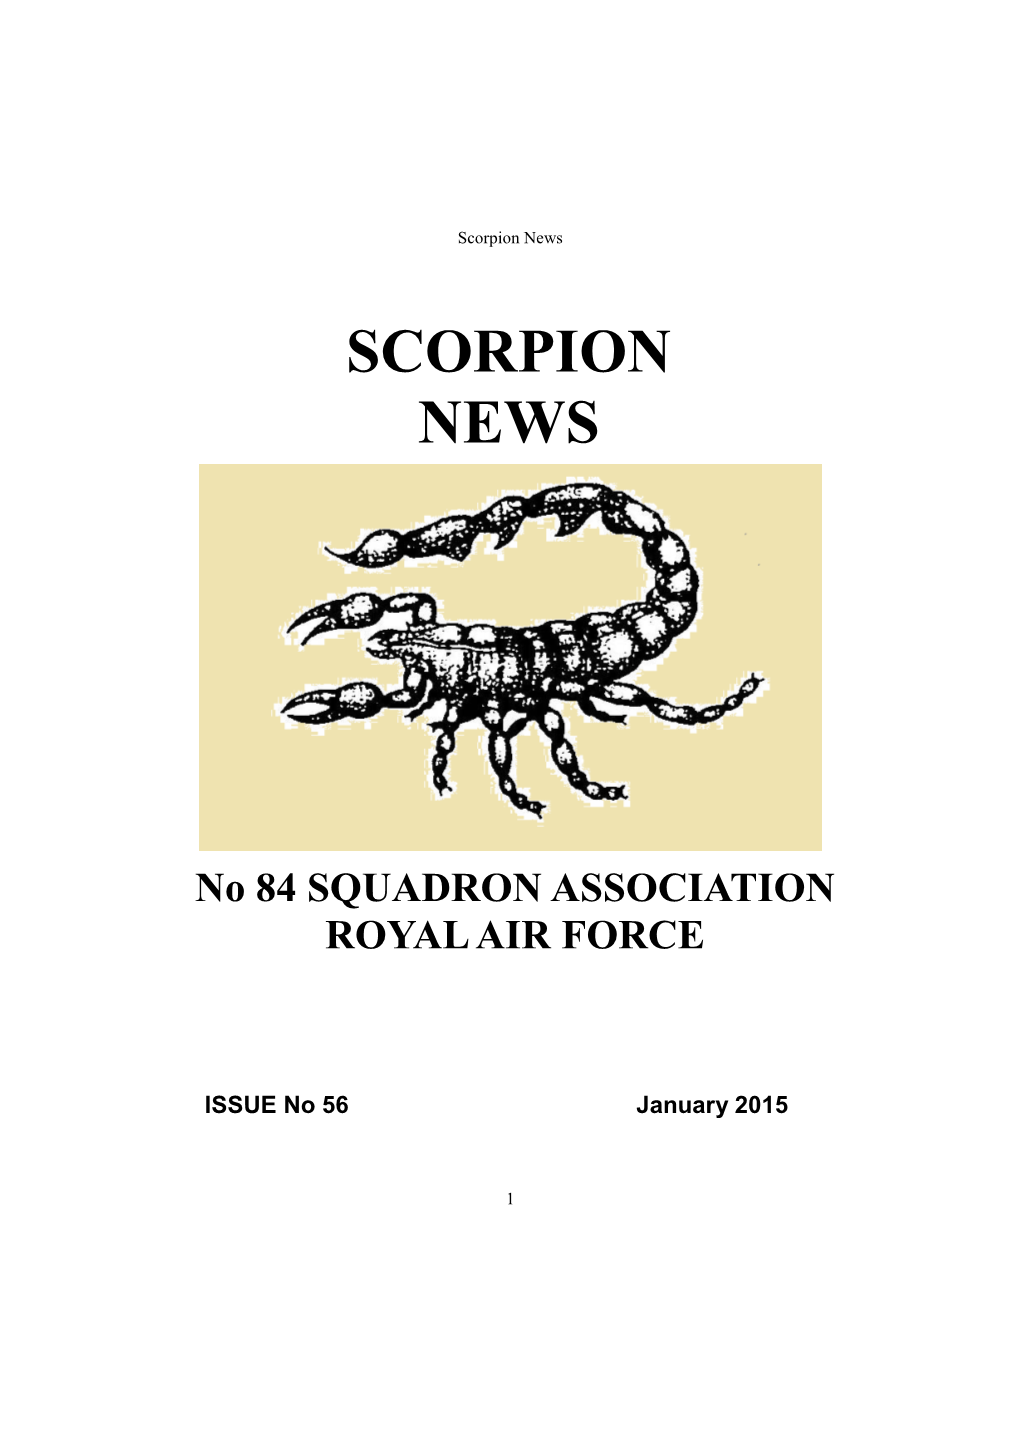 SCORPION NEWS No 84 SQUADRON ASSOCIATION